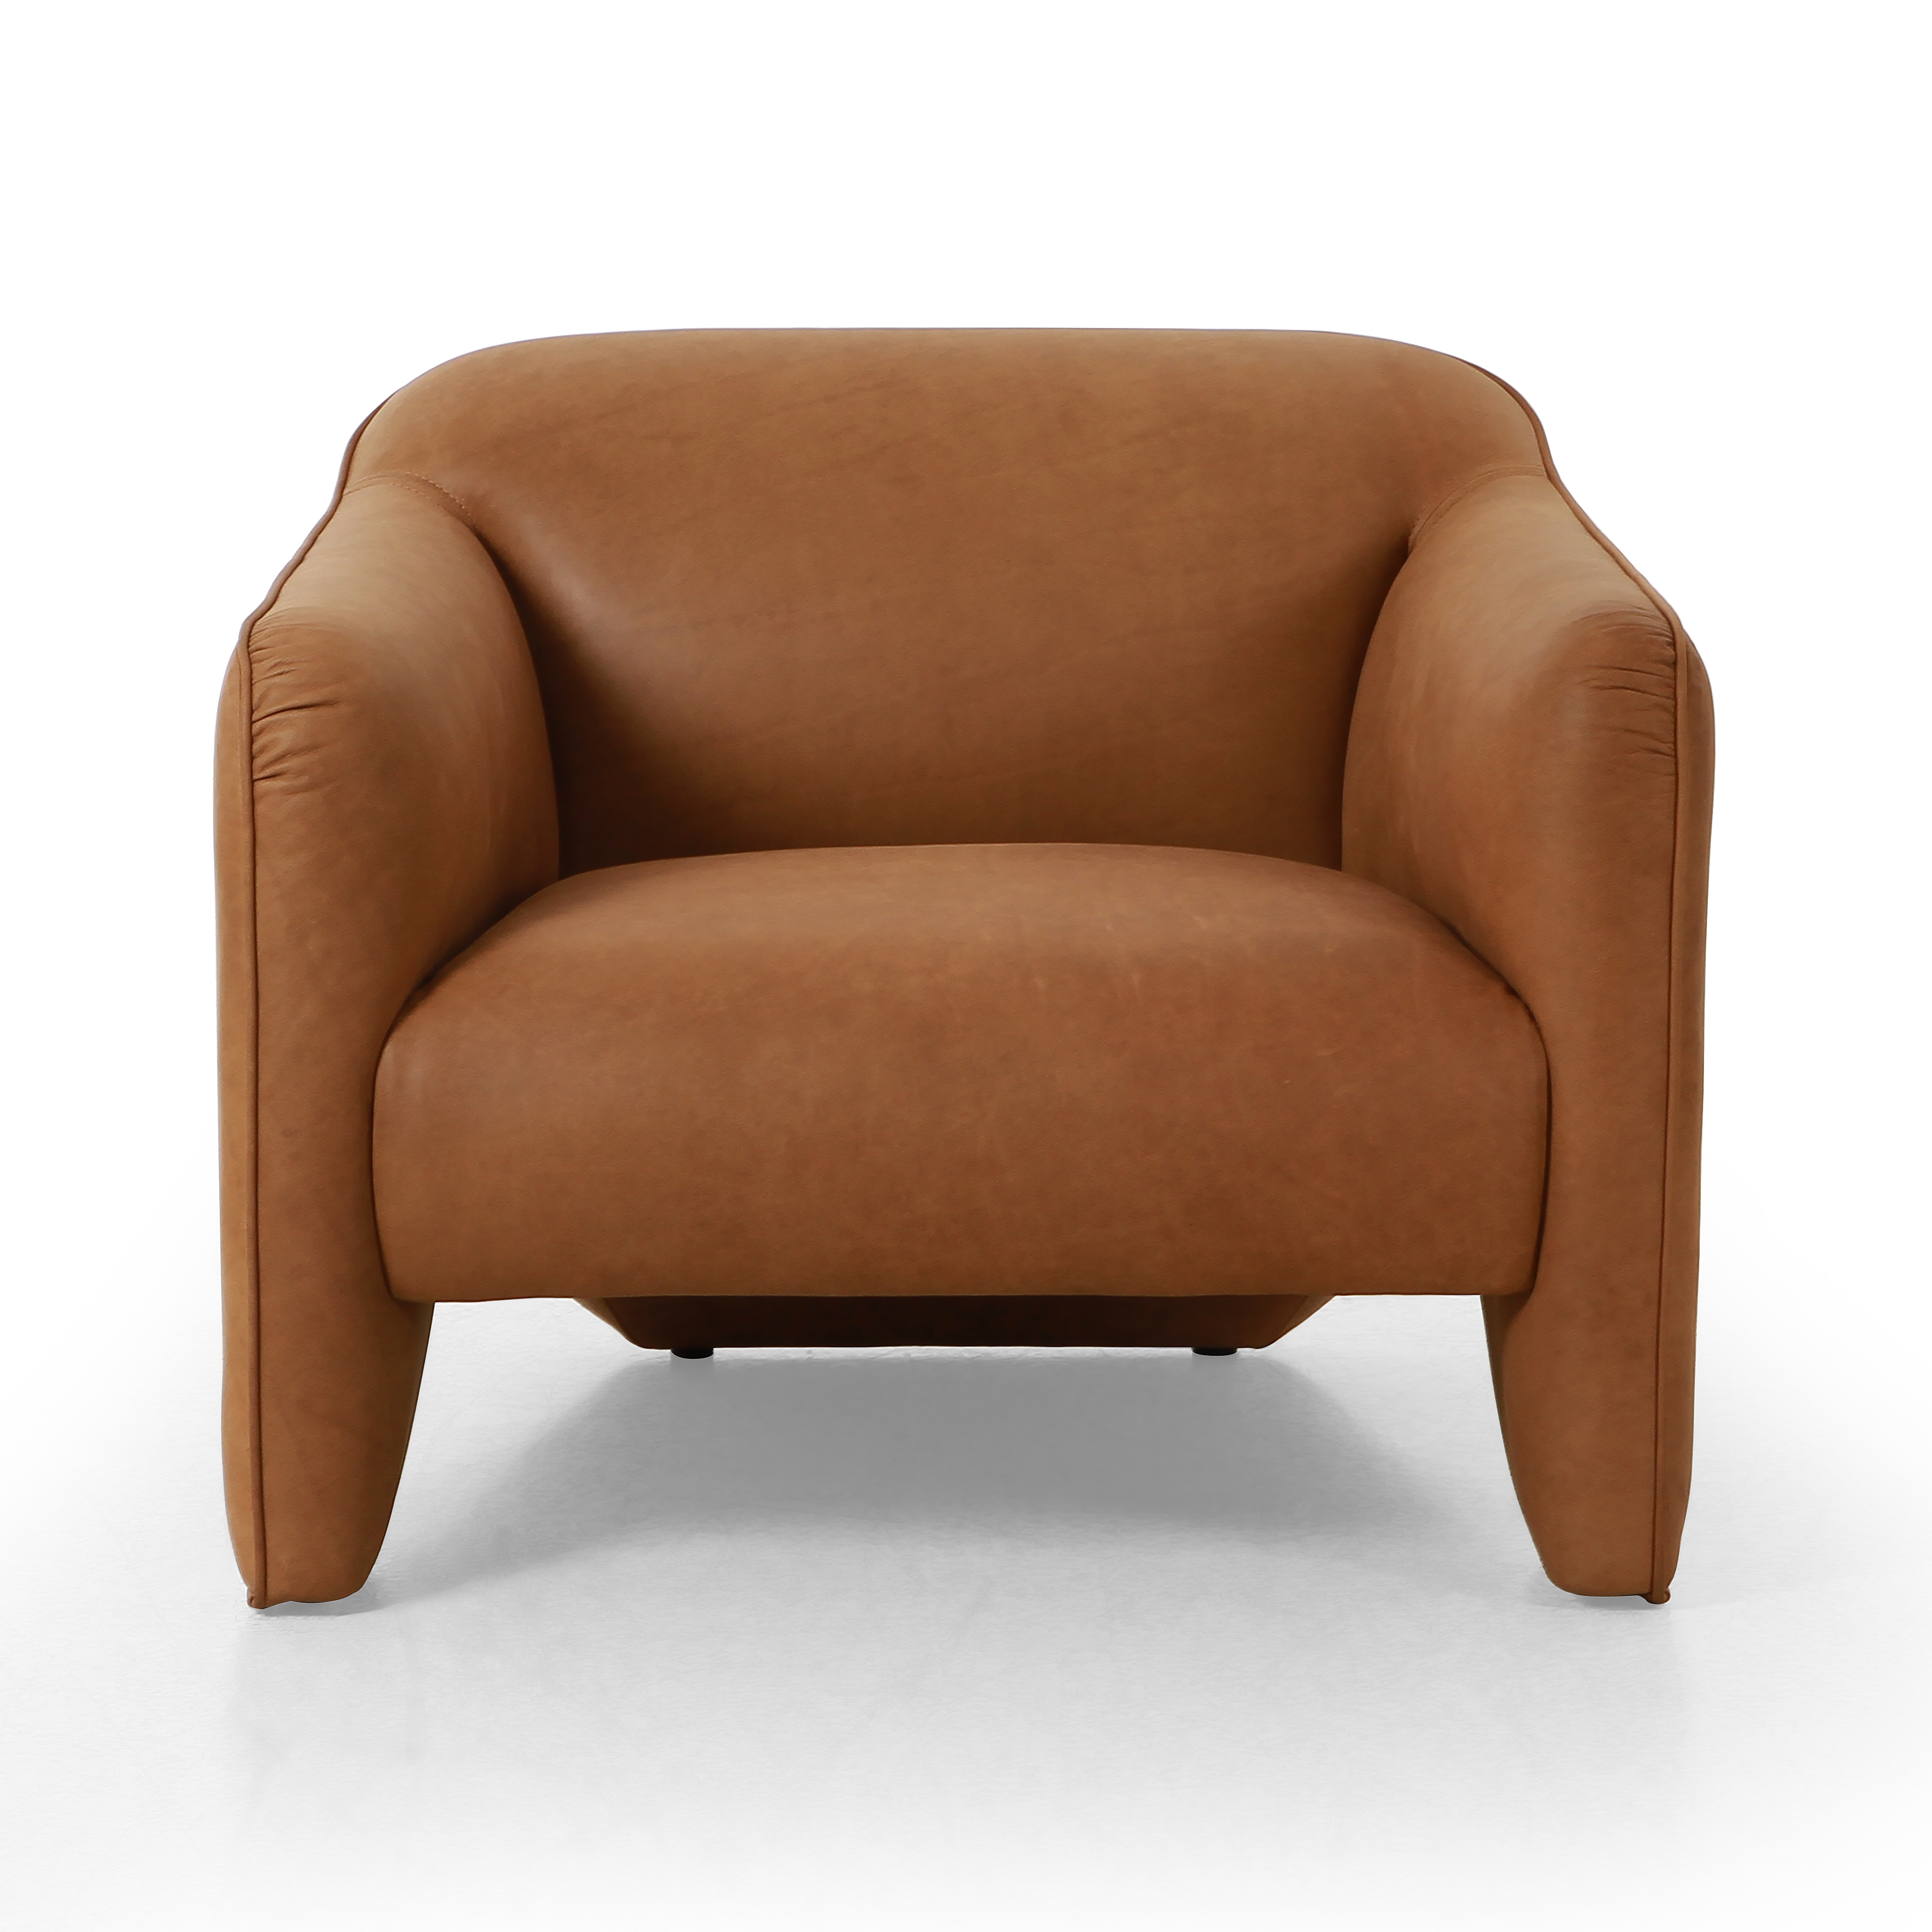 Daria Chair-Eucapel Cognac - Image 3